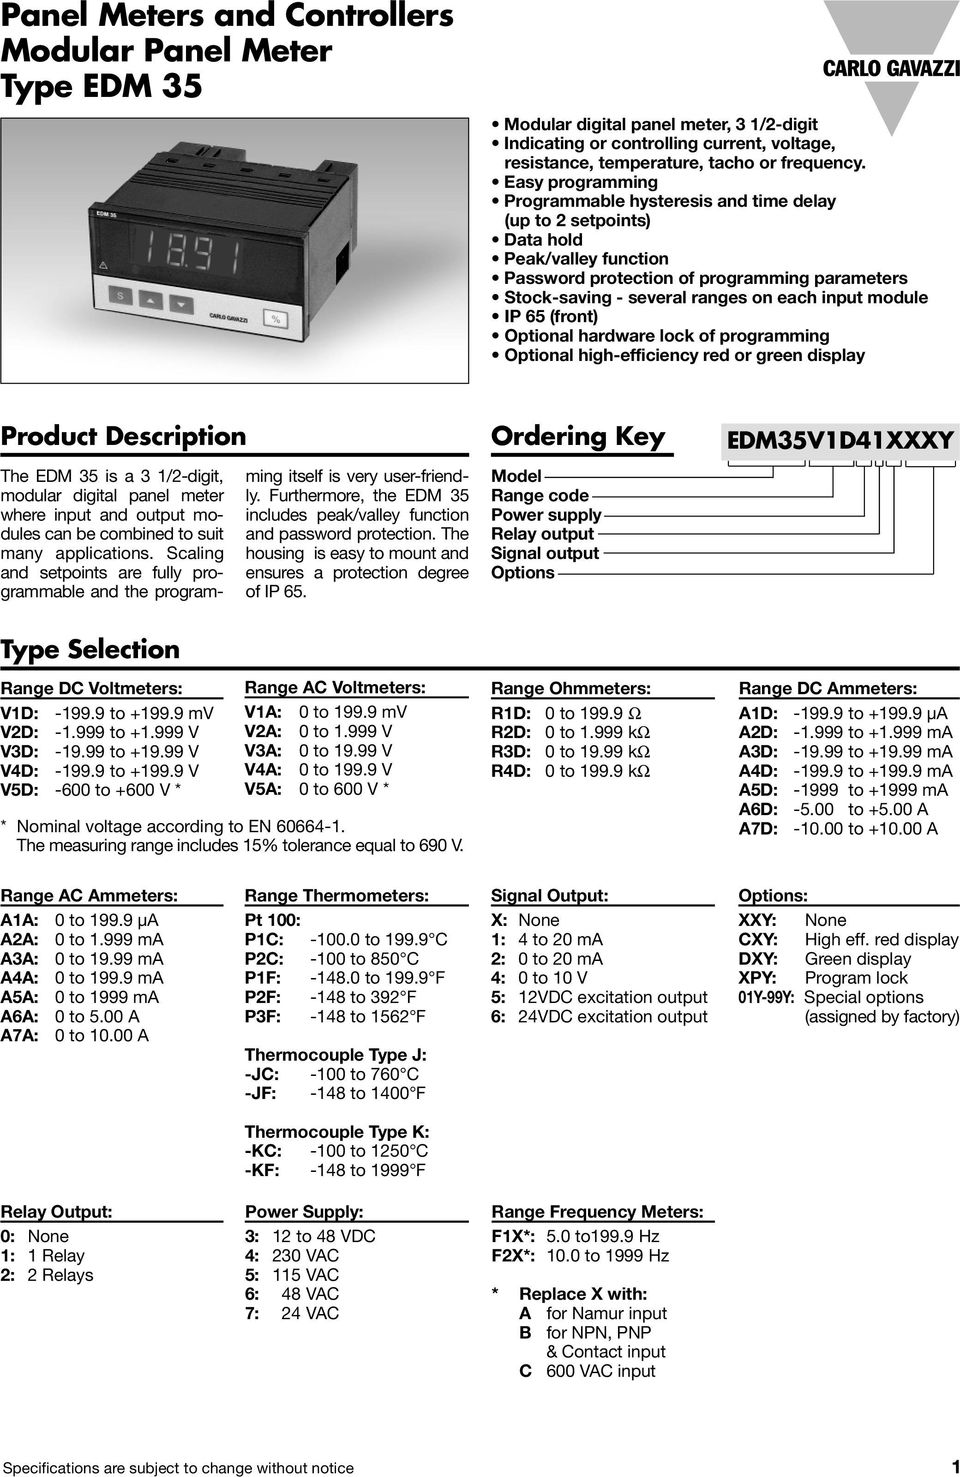 module IP 65 (front) Optional hardware lock of programming Optional high-efficiency red or green display Product Description Type Selection Range DC Voltmeters: V1D: -199.9 to +199.9 mv V2D: -1.